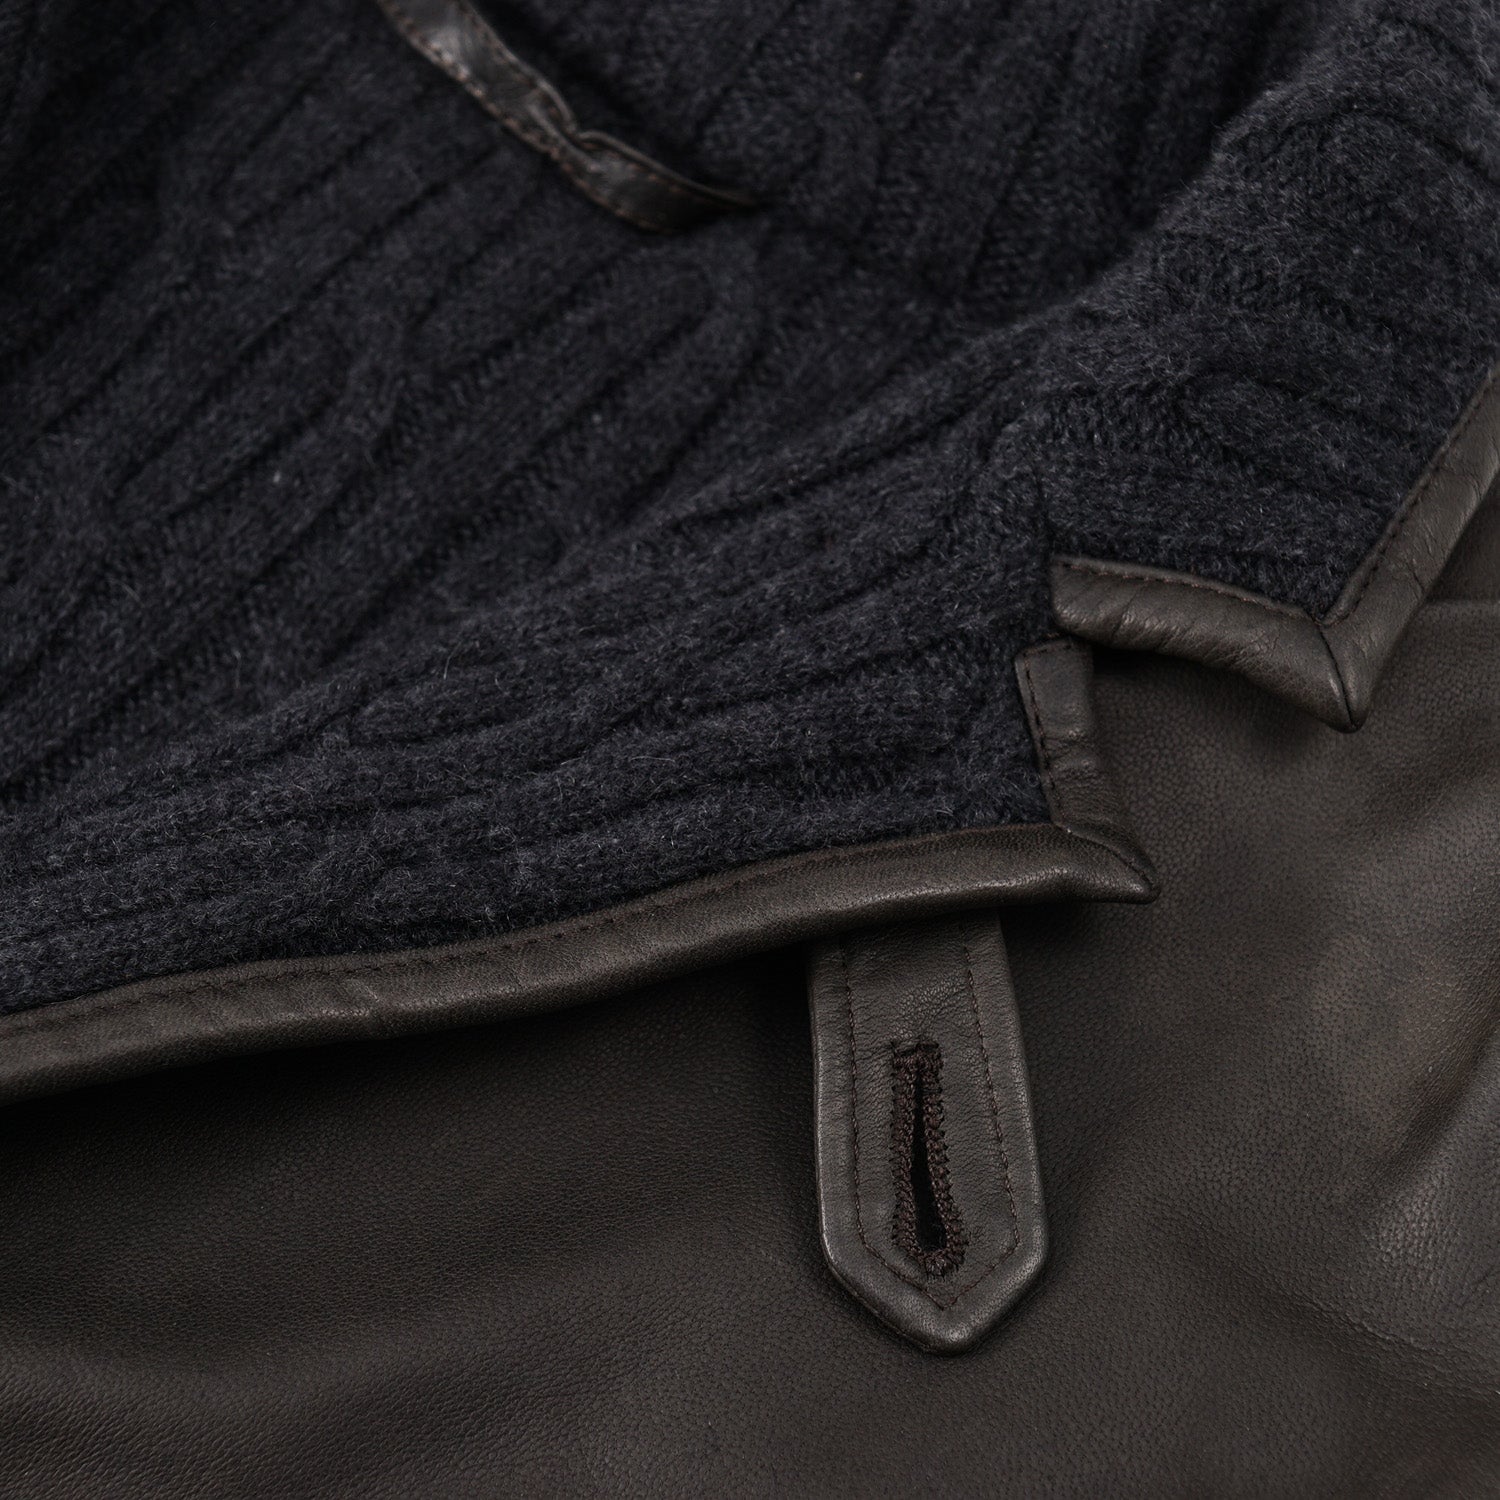 Cesare Attolini Leather Jacket with Cashmere Lining - Top Shelf Apparel